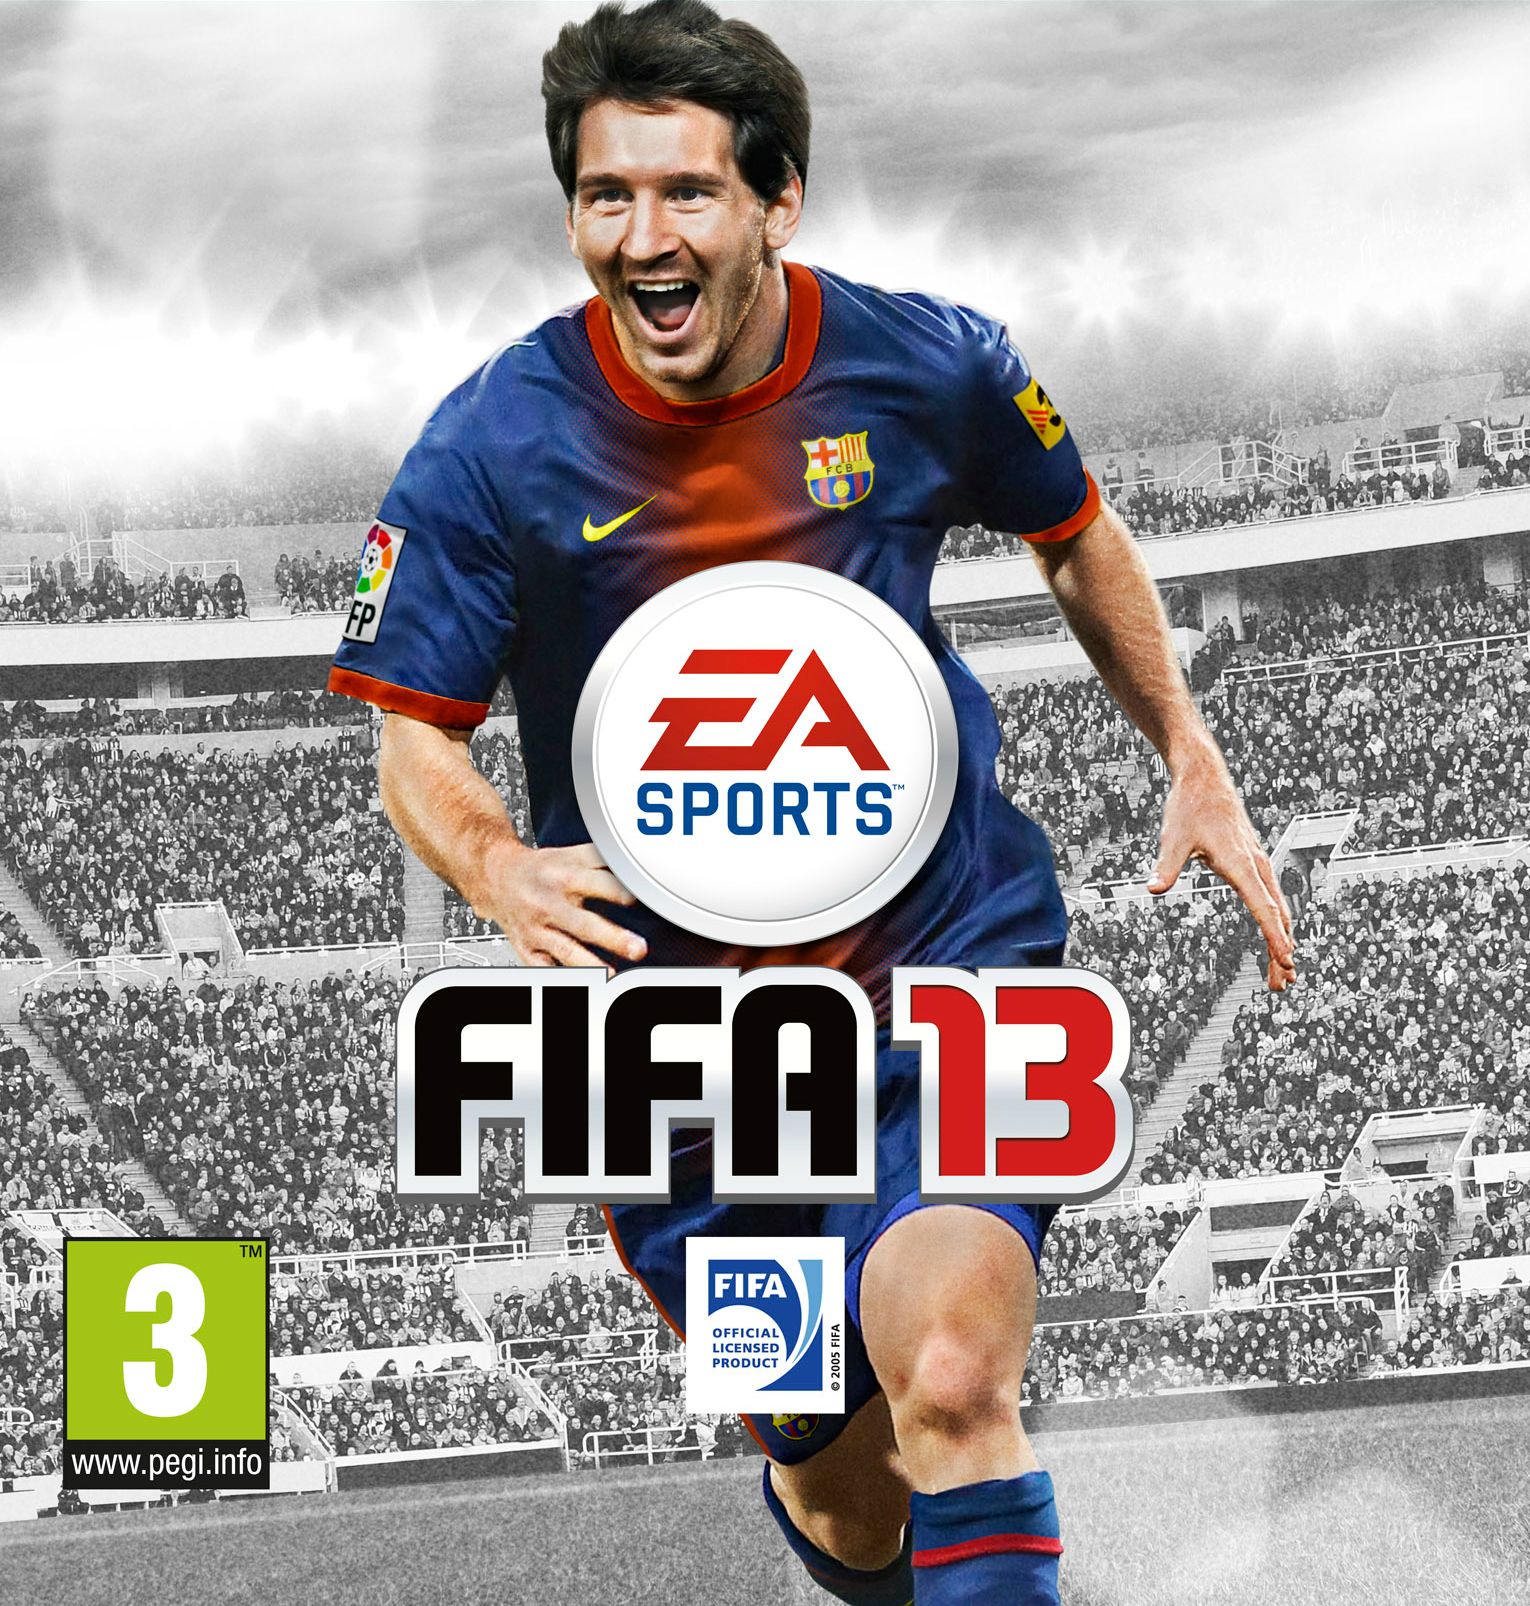 EA Sports FC: capa oficial do 'FIFA 24' é apresentada